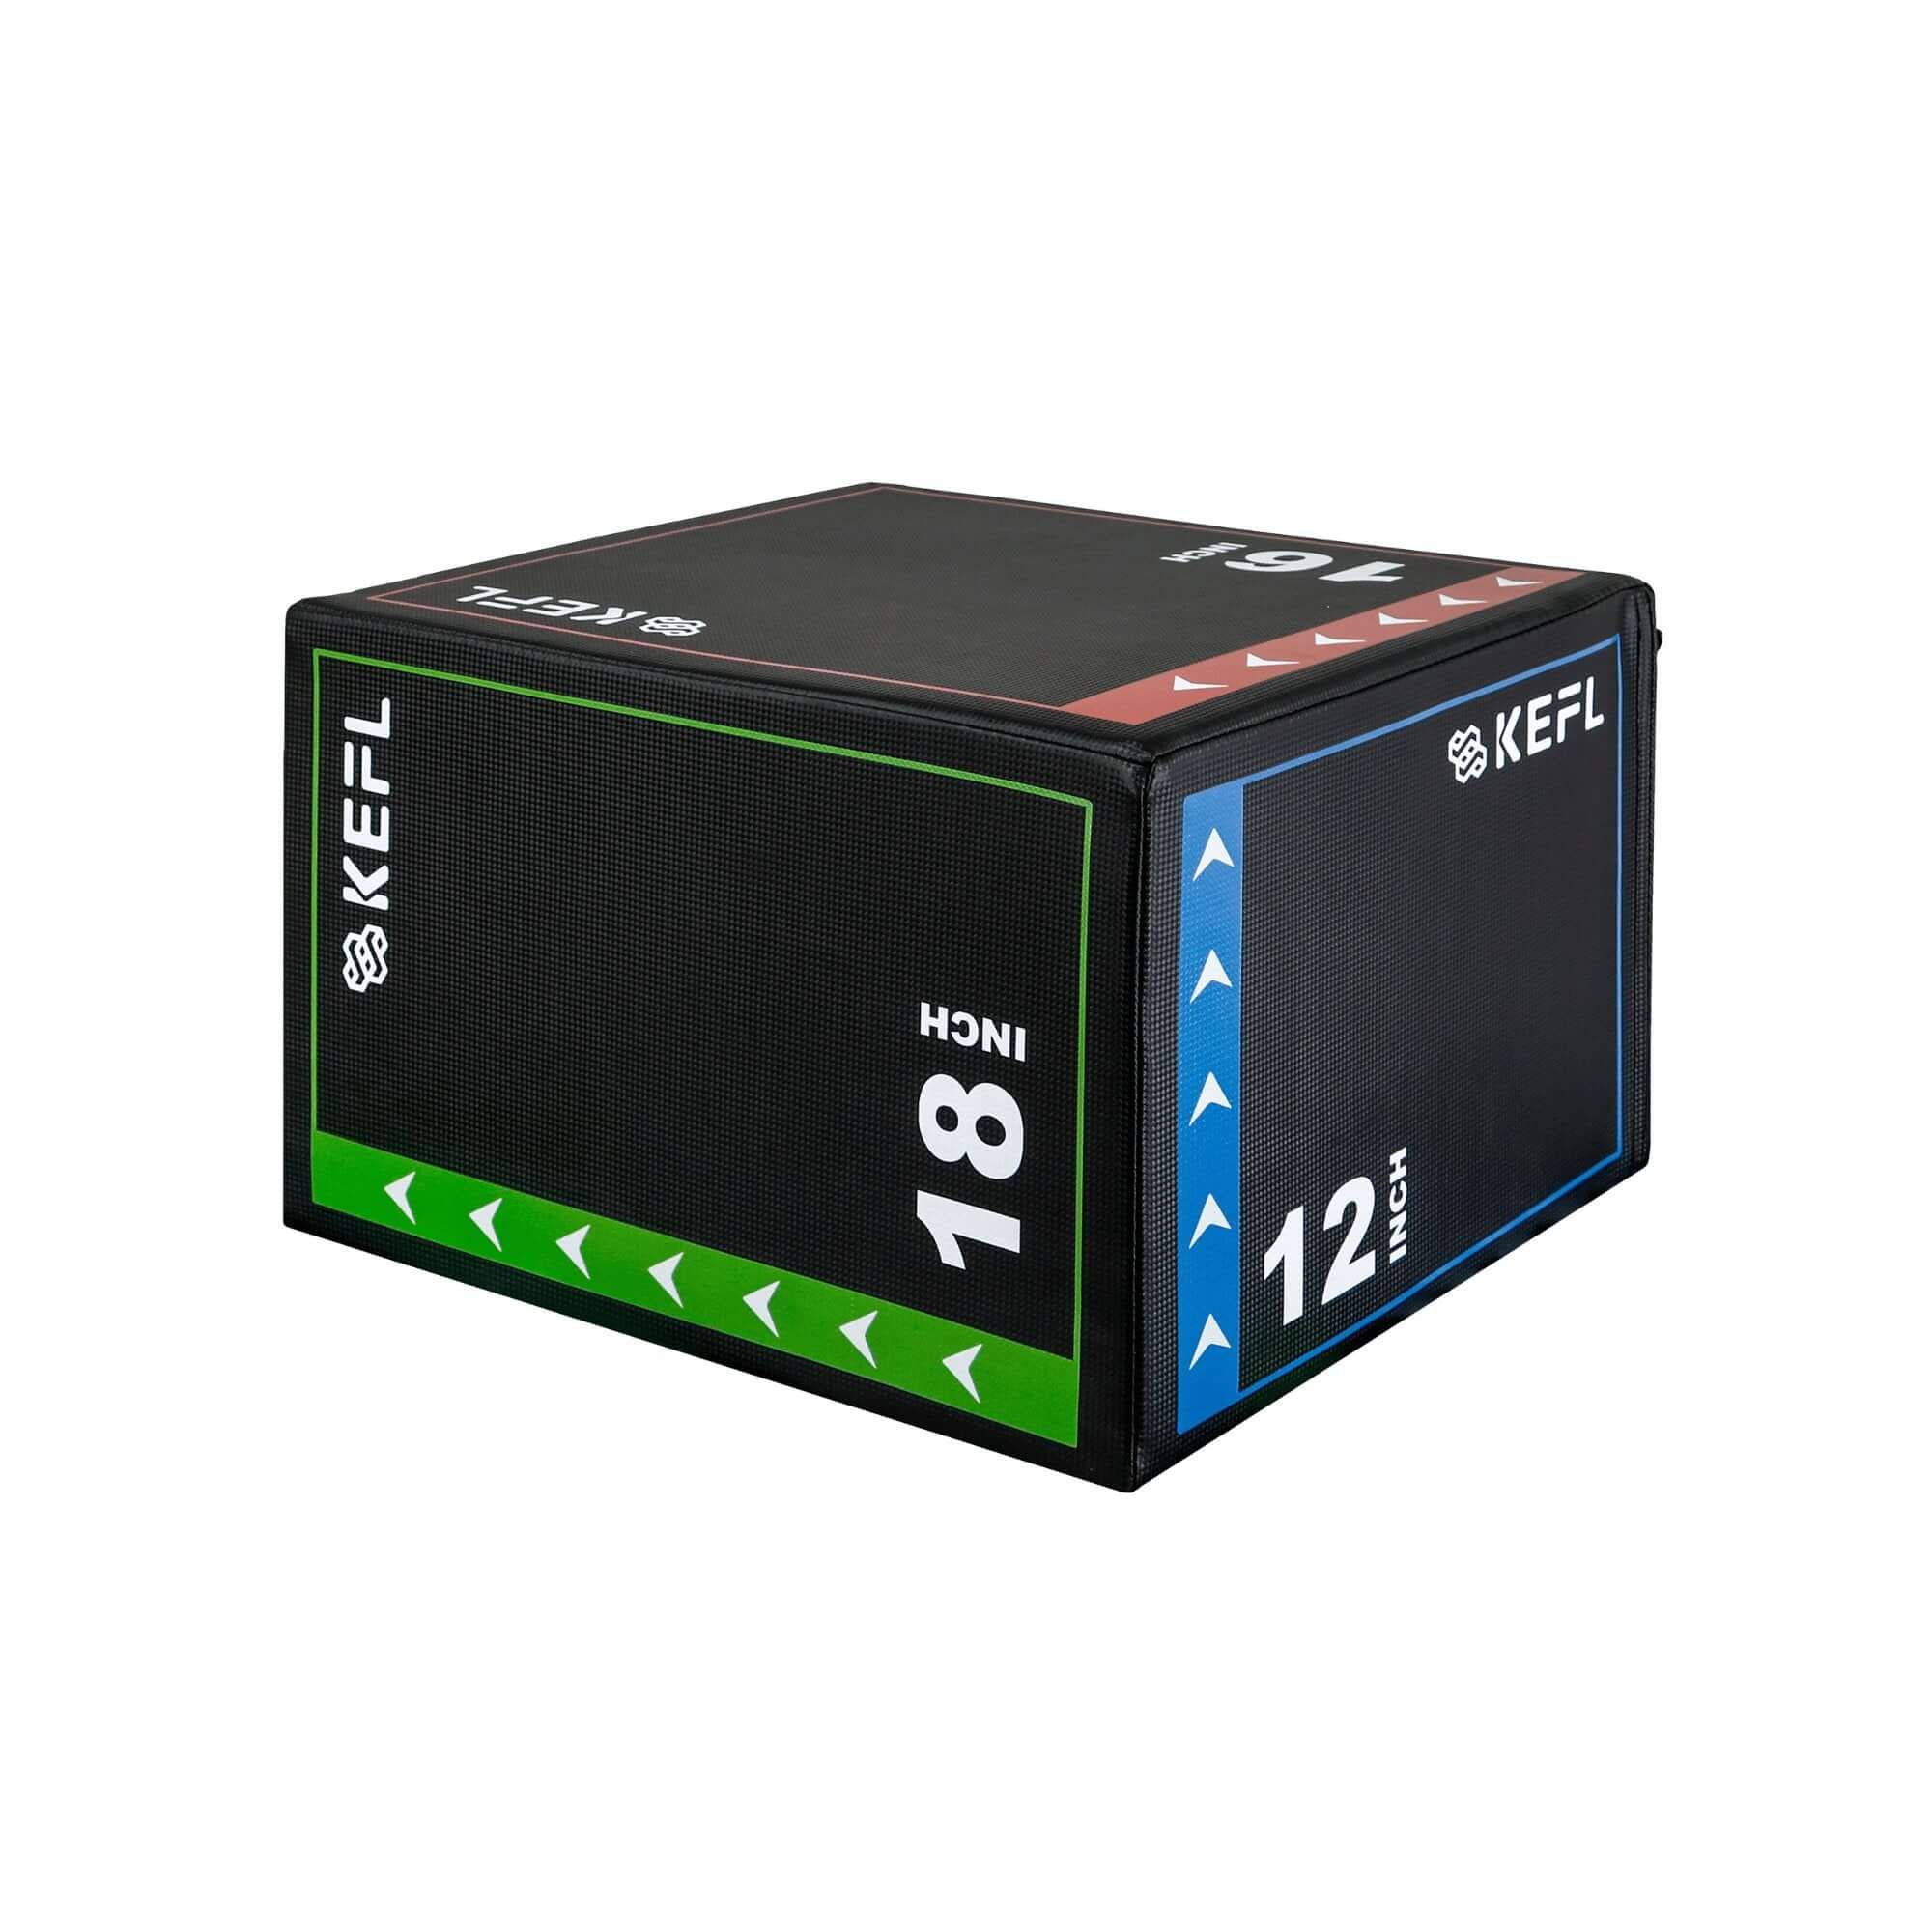 KEFL 3 in 1 Soft Plyometric Jump Box - 18" x 16" x 12" - KEFLUK